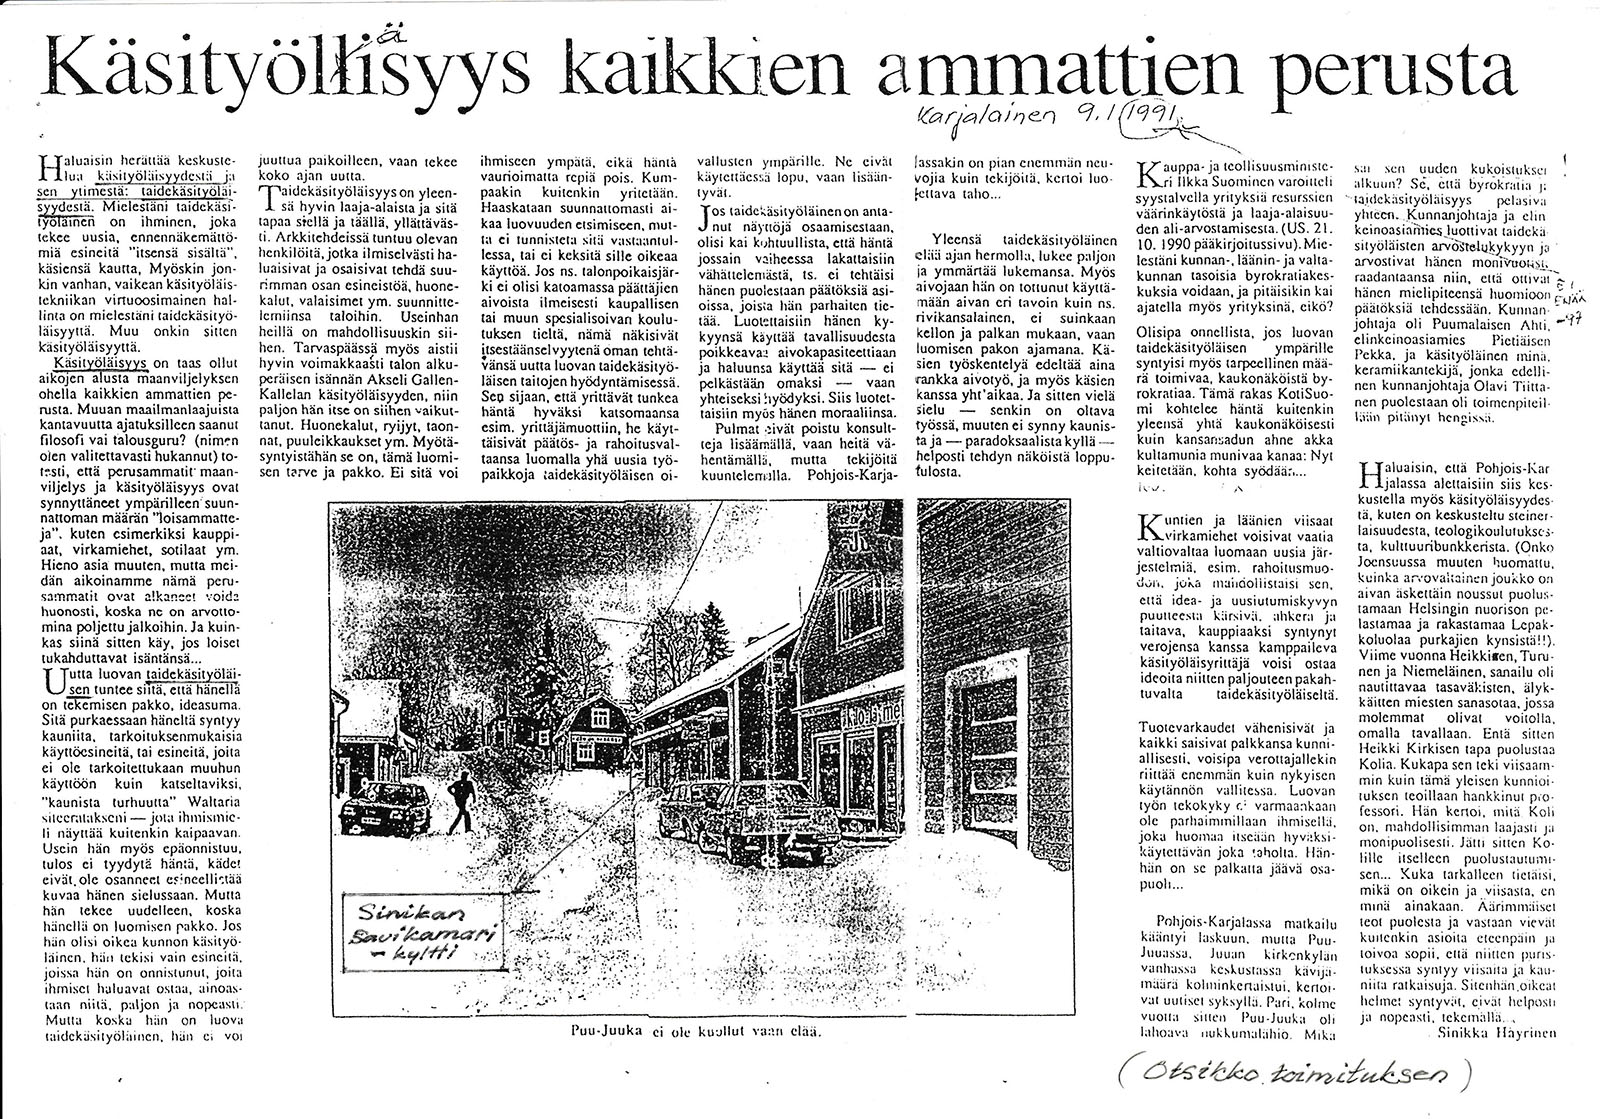 Karjalainen 9.1.1991